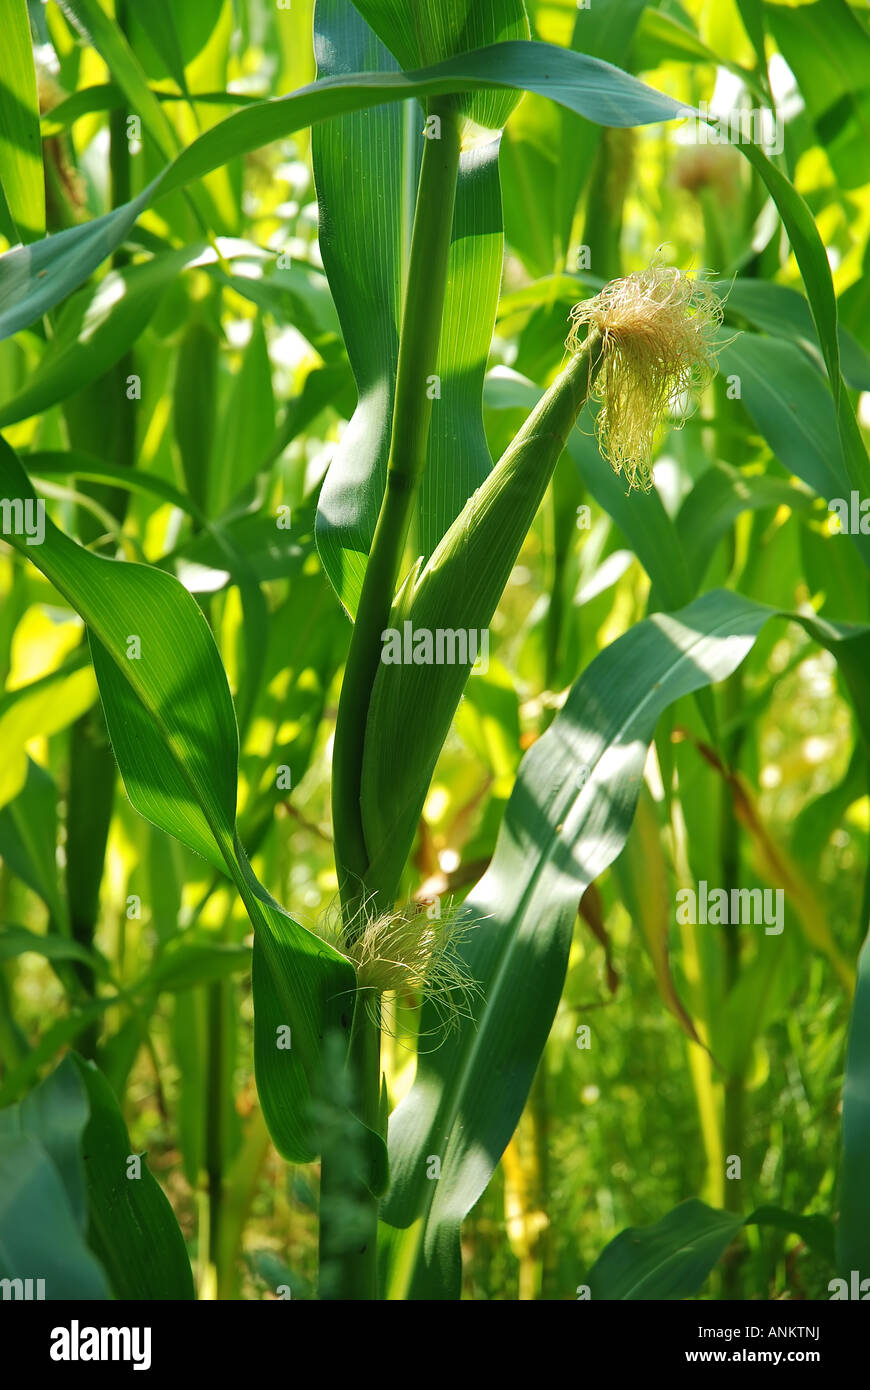 Corn silks ie female flowers. Green dominant color Stock Photo